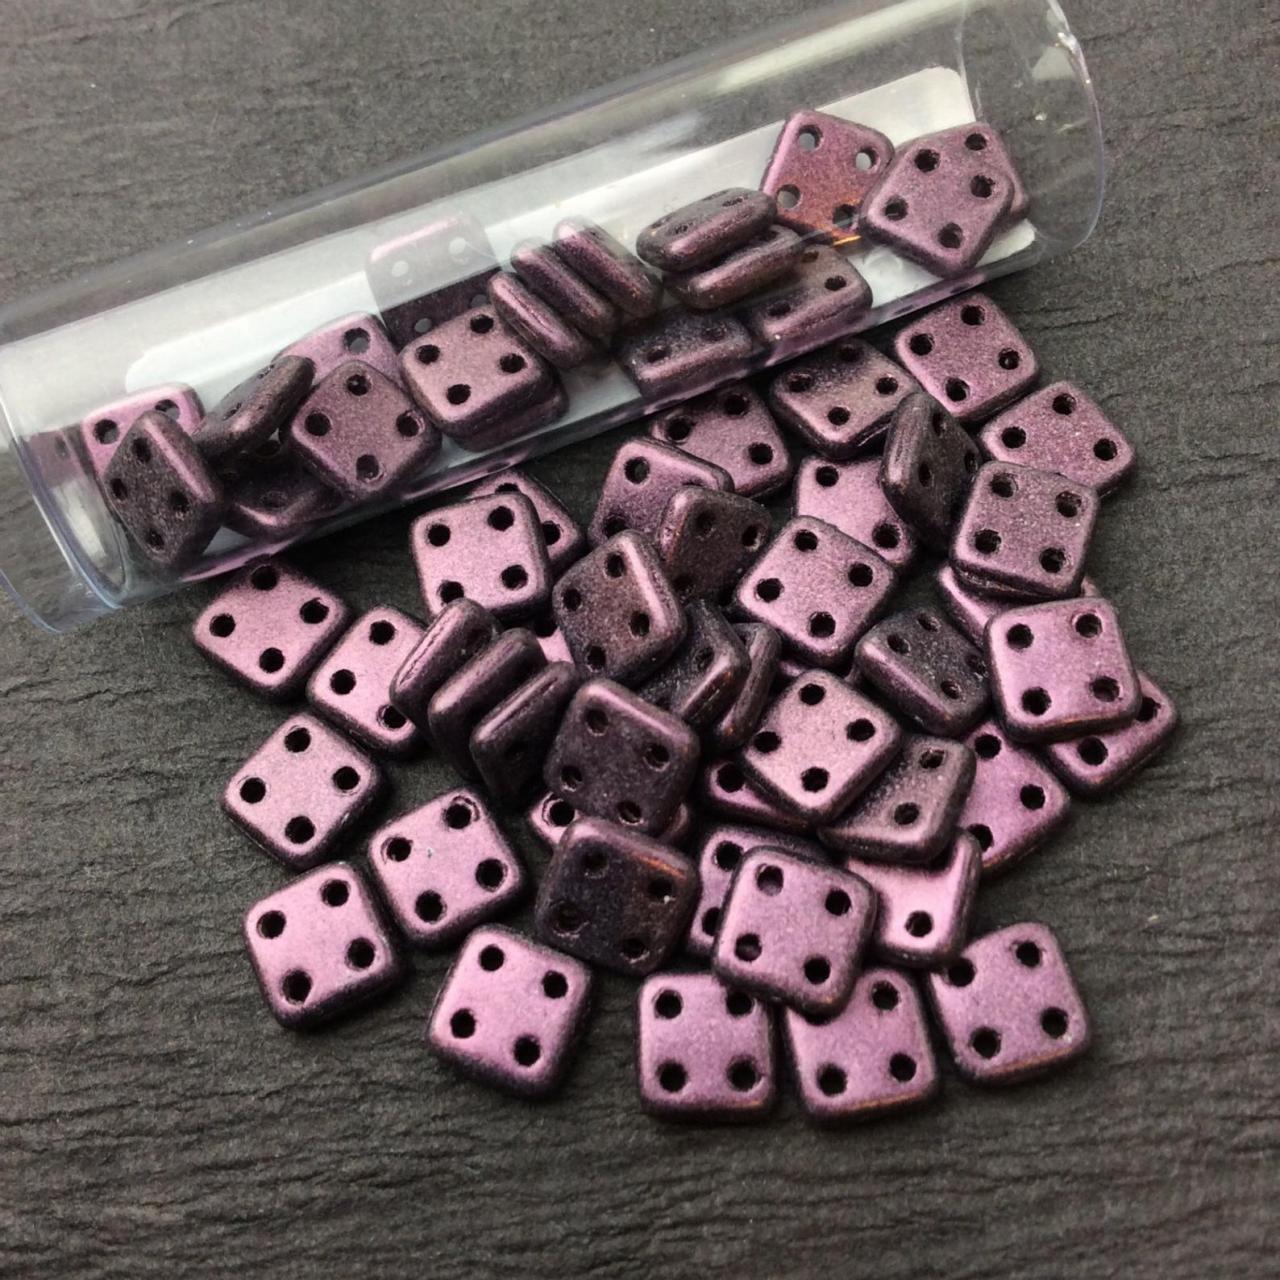 Quadratile 6x6mm Czech Glass Beads Metallic Suede Pink #79086mjt 8 Gram Tube Purple